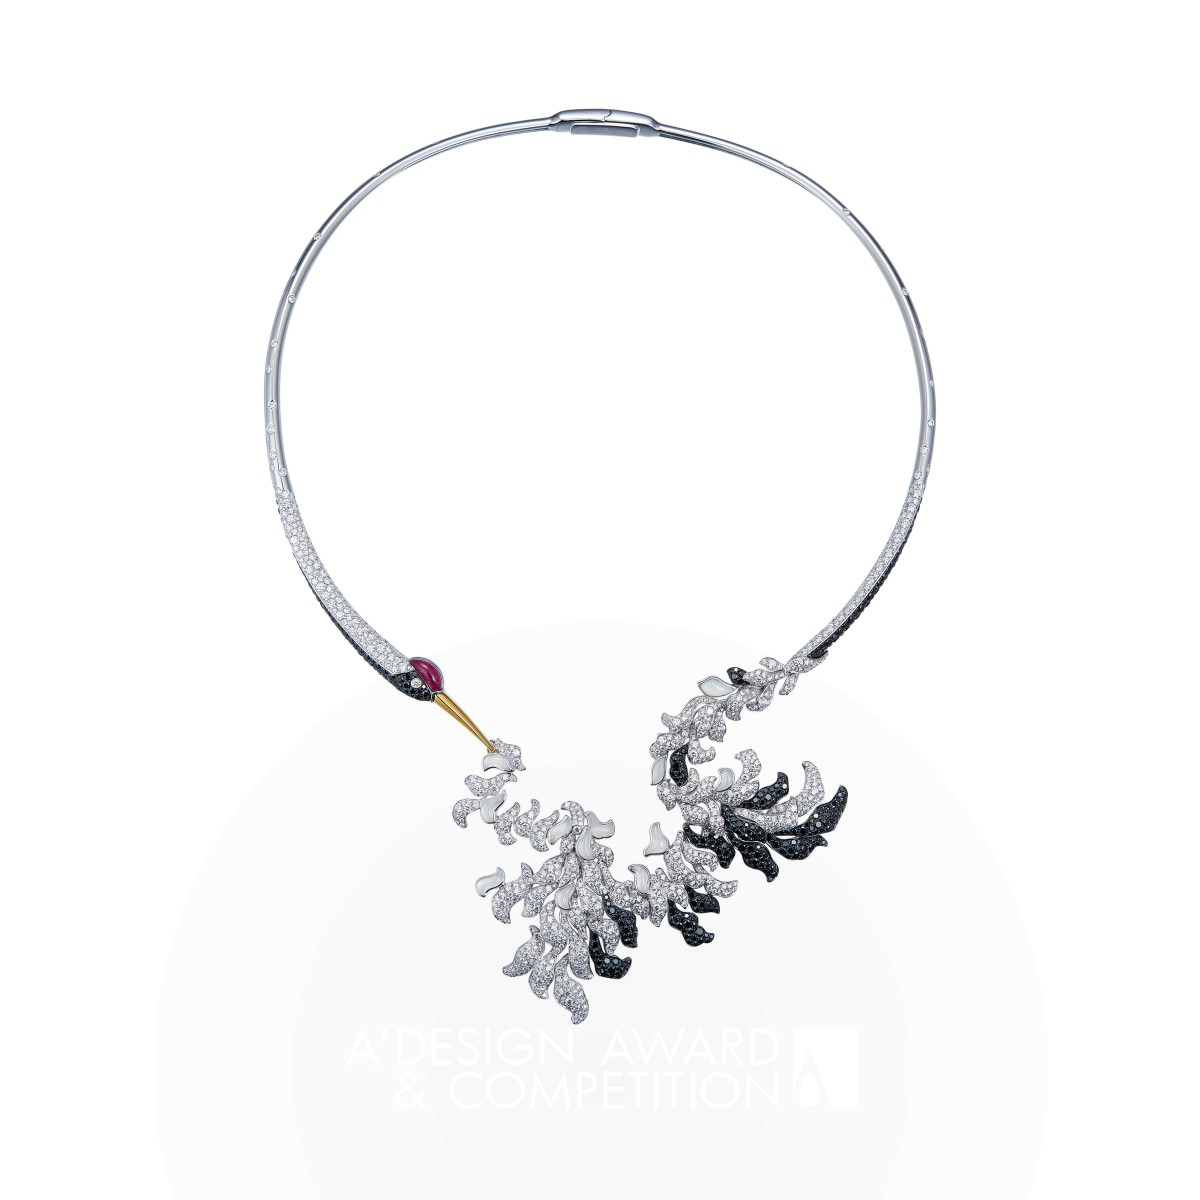 Dancing Crane Necklace  by Qingfeng Shanghai Qingfeng Electronic Technology Co., Ltd.